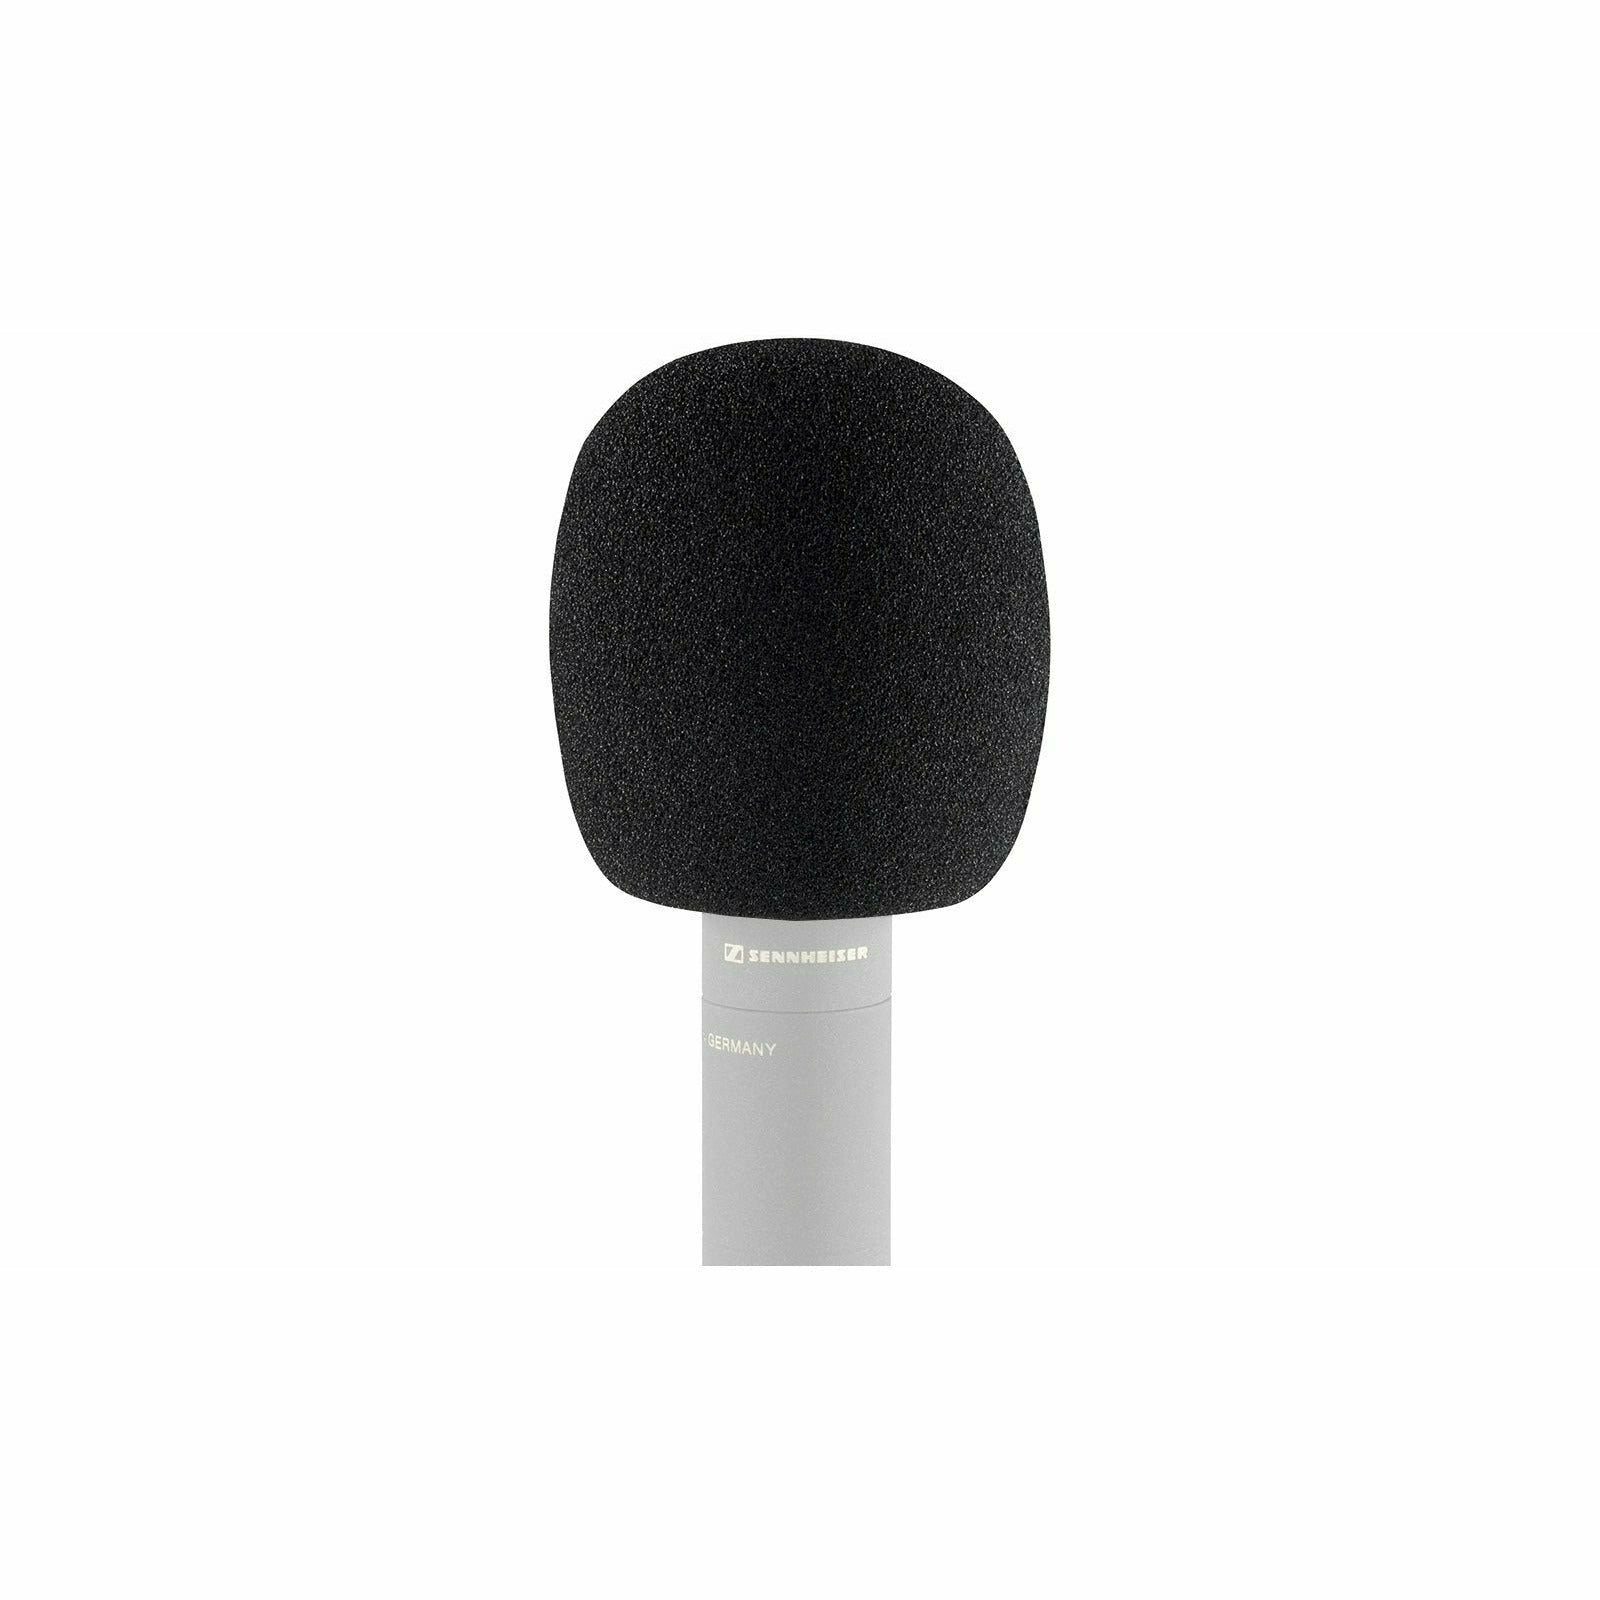 Sennheiser MZW-8000 Windscreen for MKH8000 Series Microphones - Dragon Image